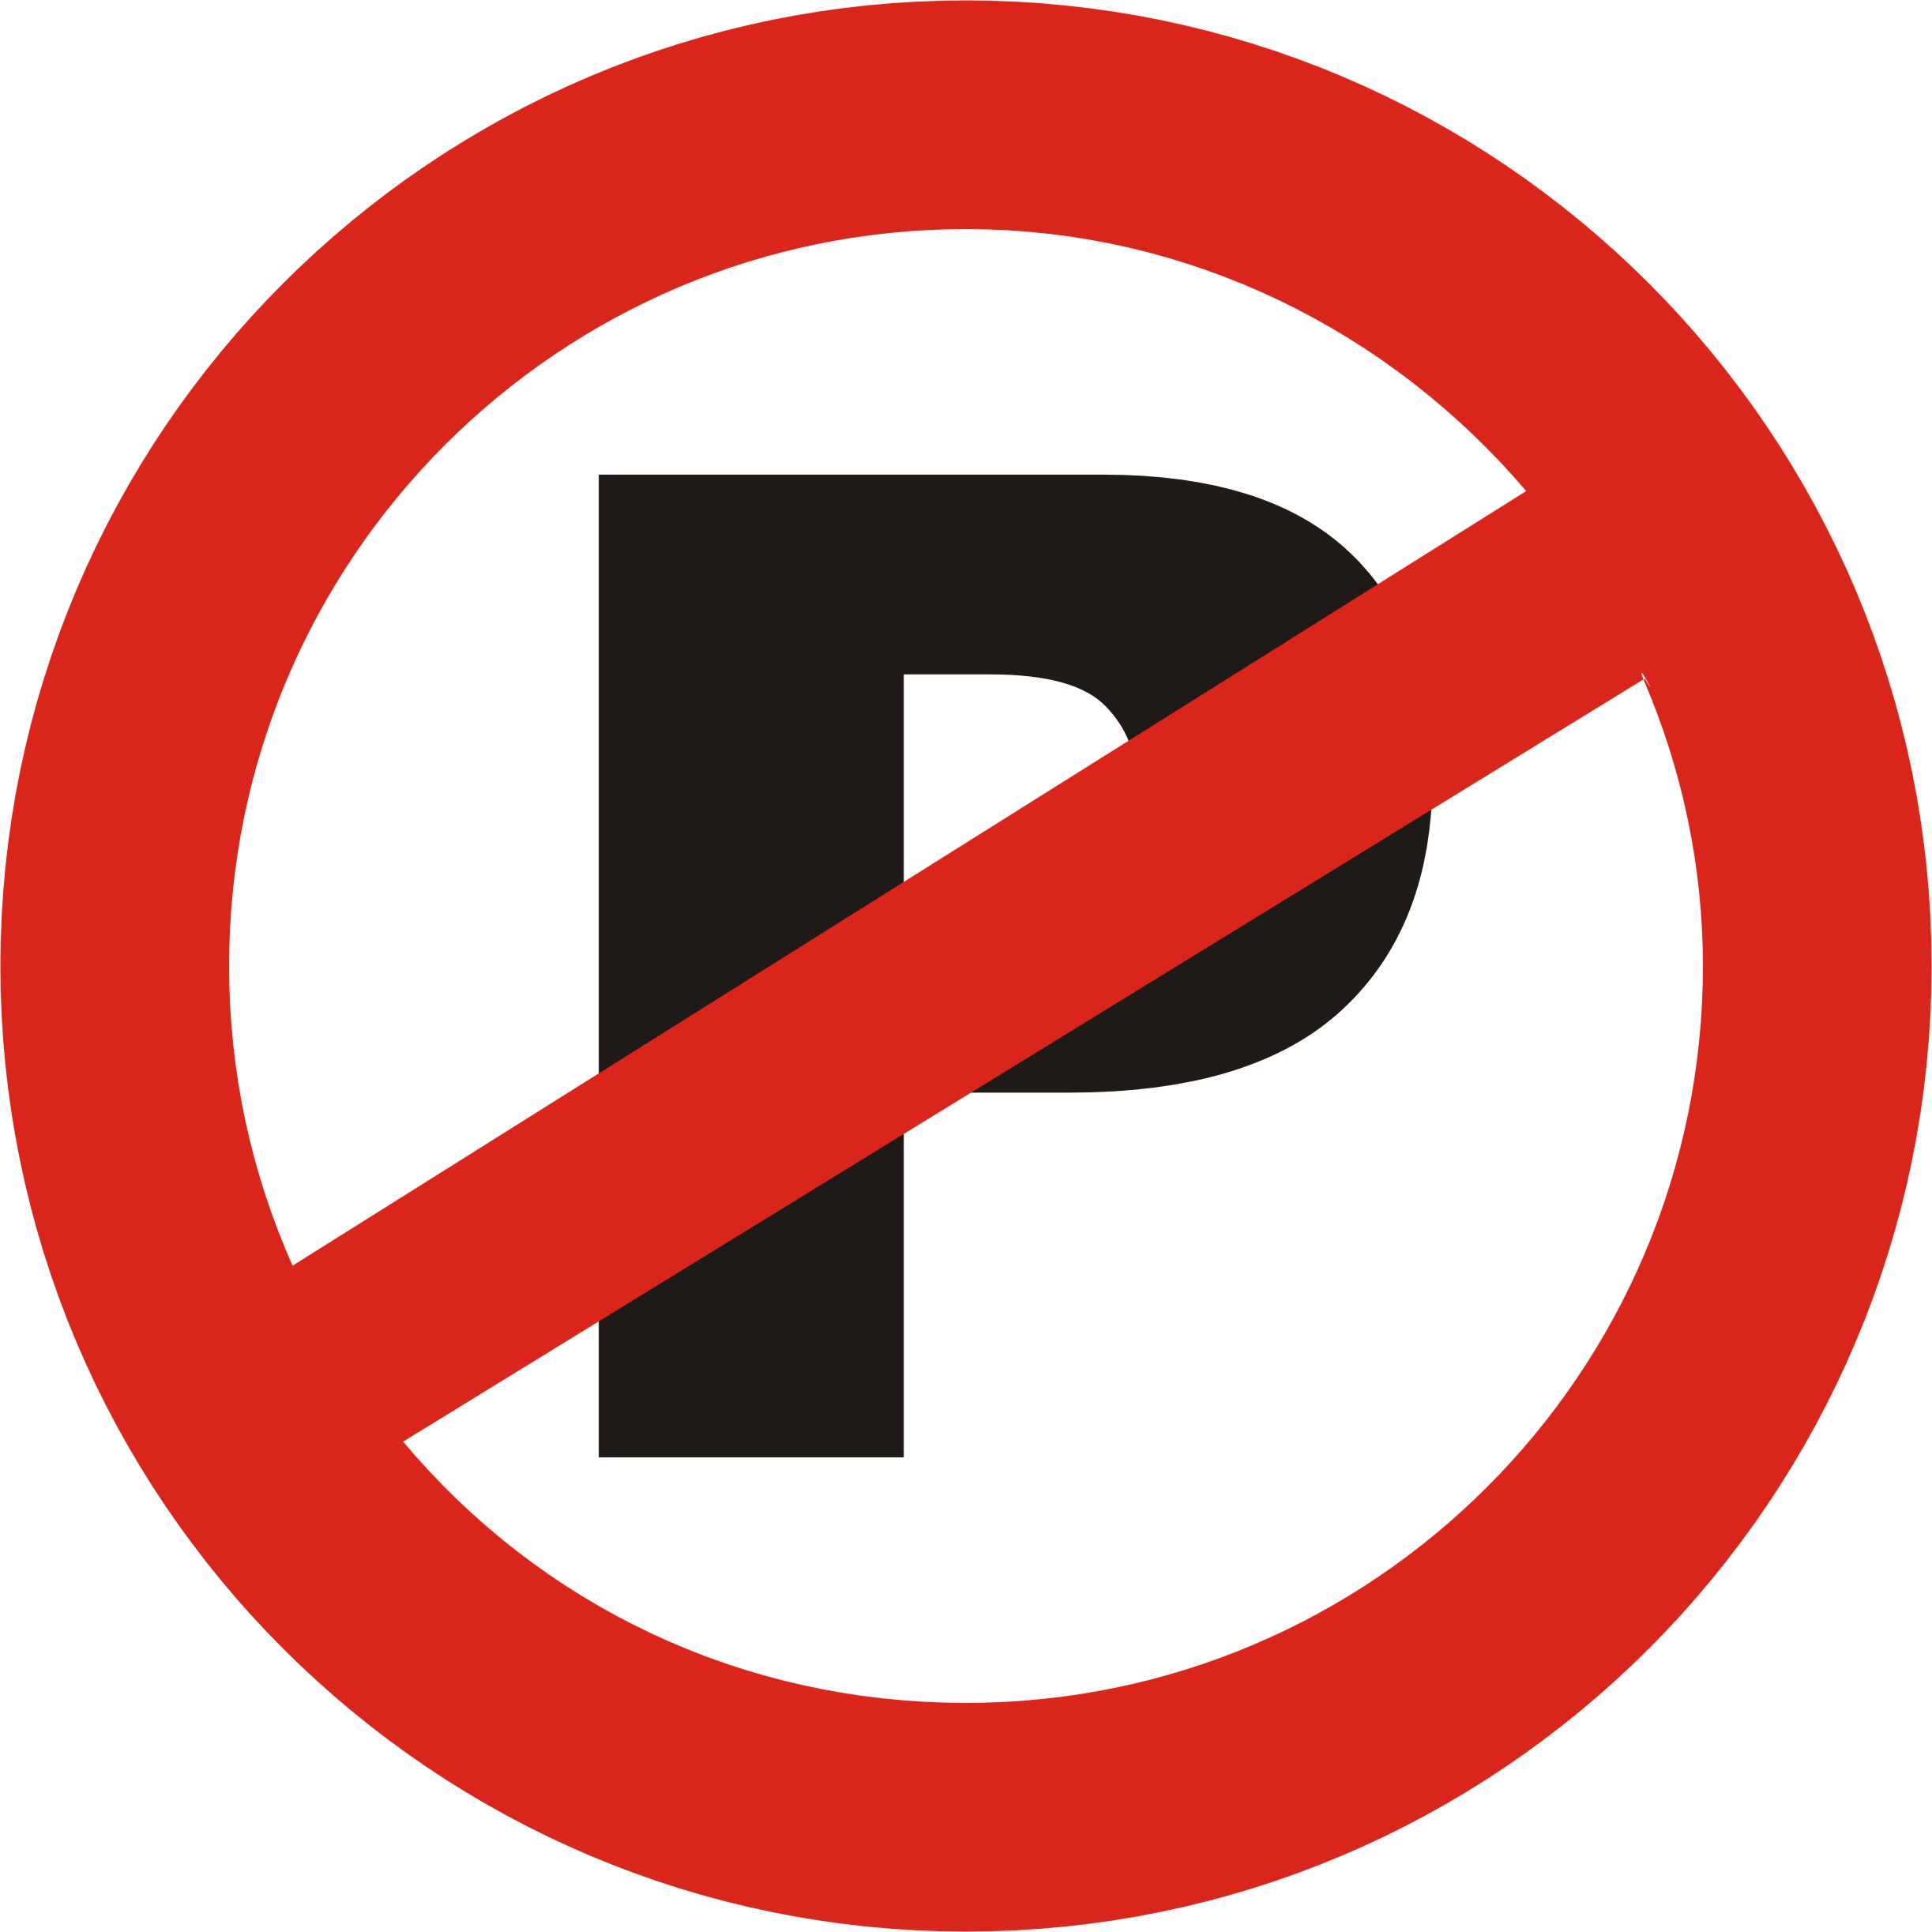 Free Printable No Parking Signs, Download Free Printable No Parking